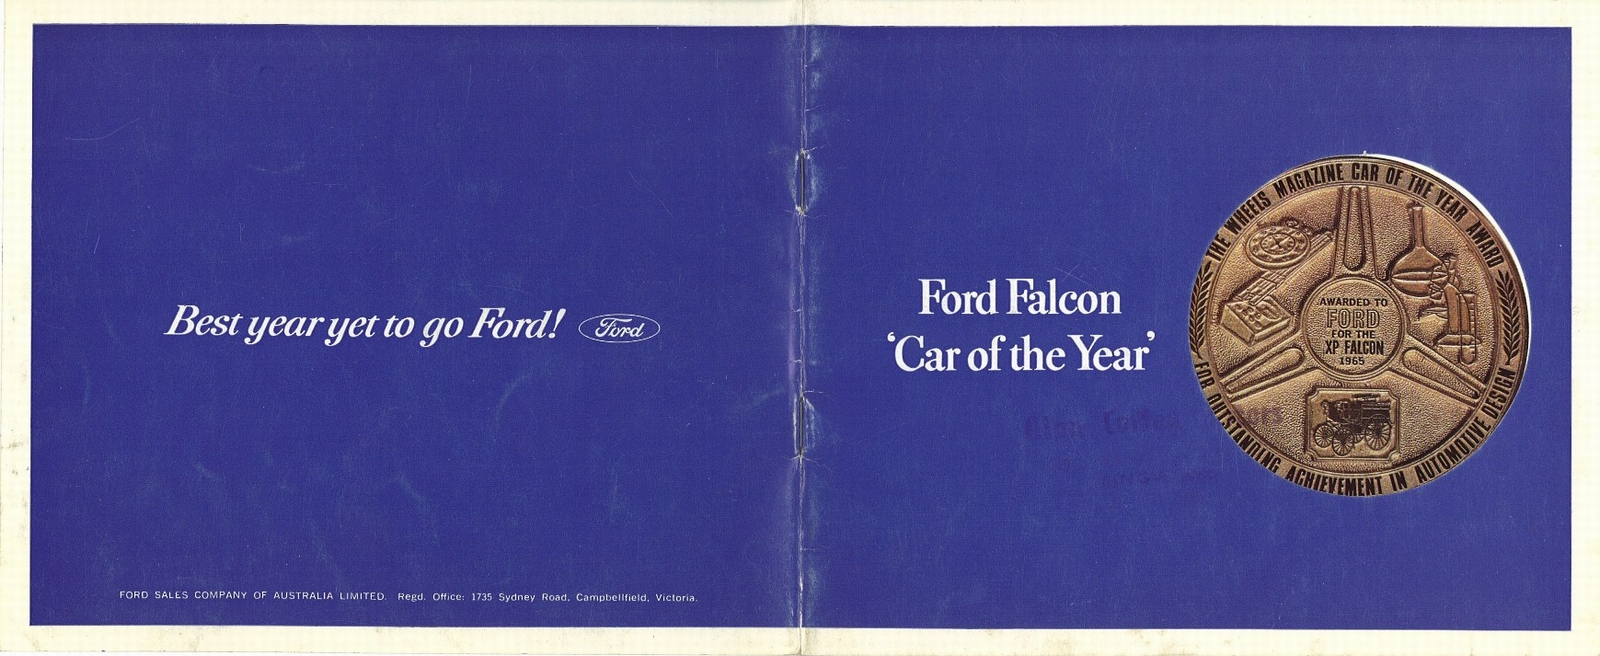 n_1965 Ford Falcon 'Car of the Year' (Aus)-00-14.jpg